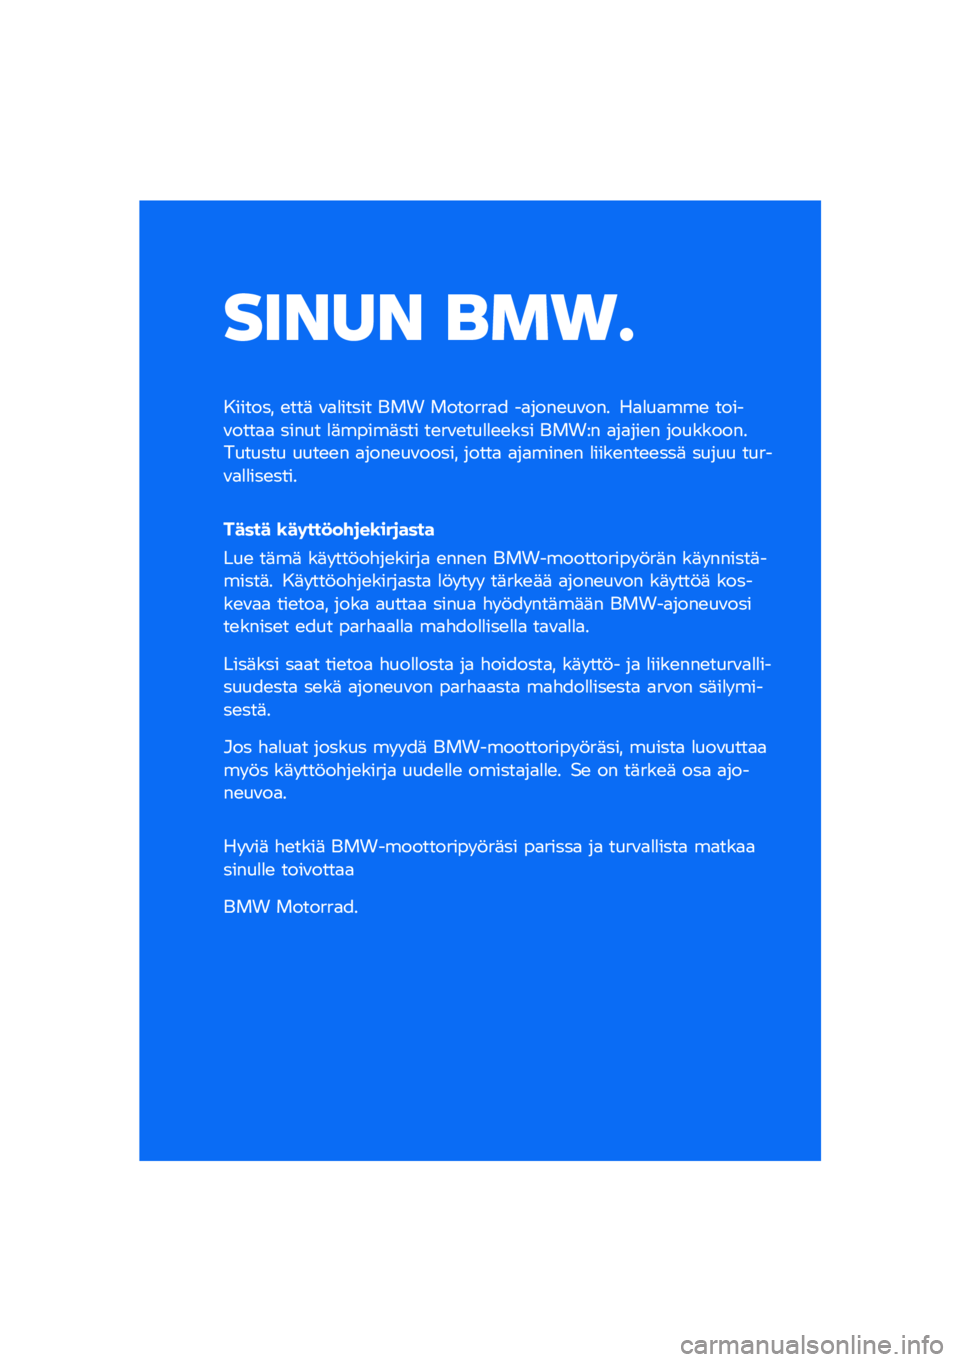 BMW MOTORRAD M 1000 RR 2021  Käsikirja (in Finnish) ����� ���\b�	
������� �\b���	 �\f�
�
����� ��� �������
� ��
����\b��\f��� ��
�
��
���\b �����\f����
�
 ����� �
�	�����	��� ��\b��\f�\b�